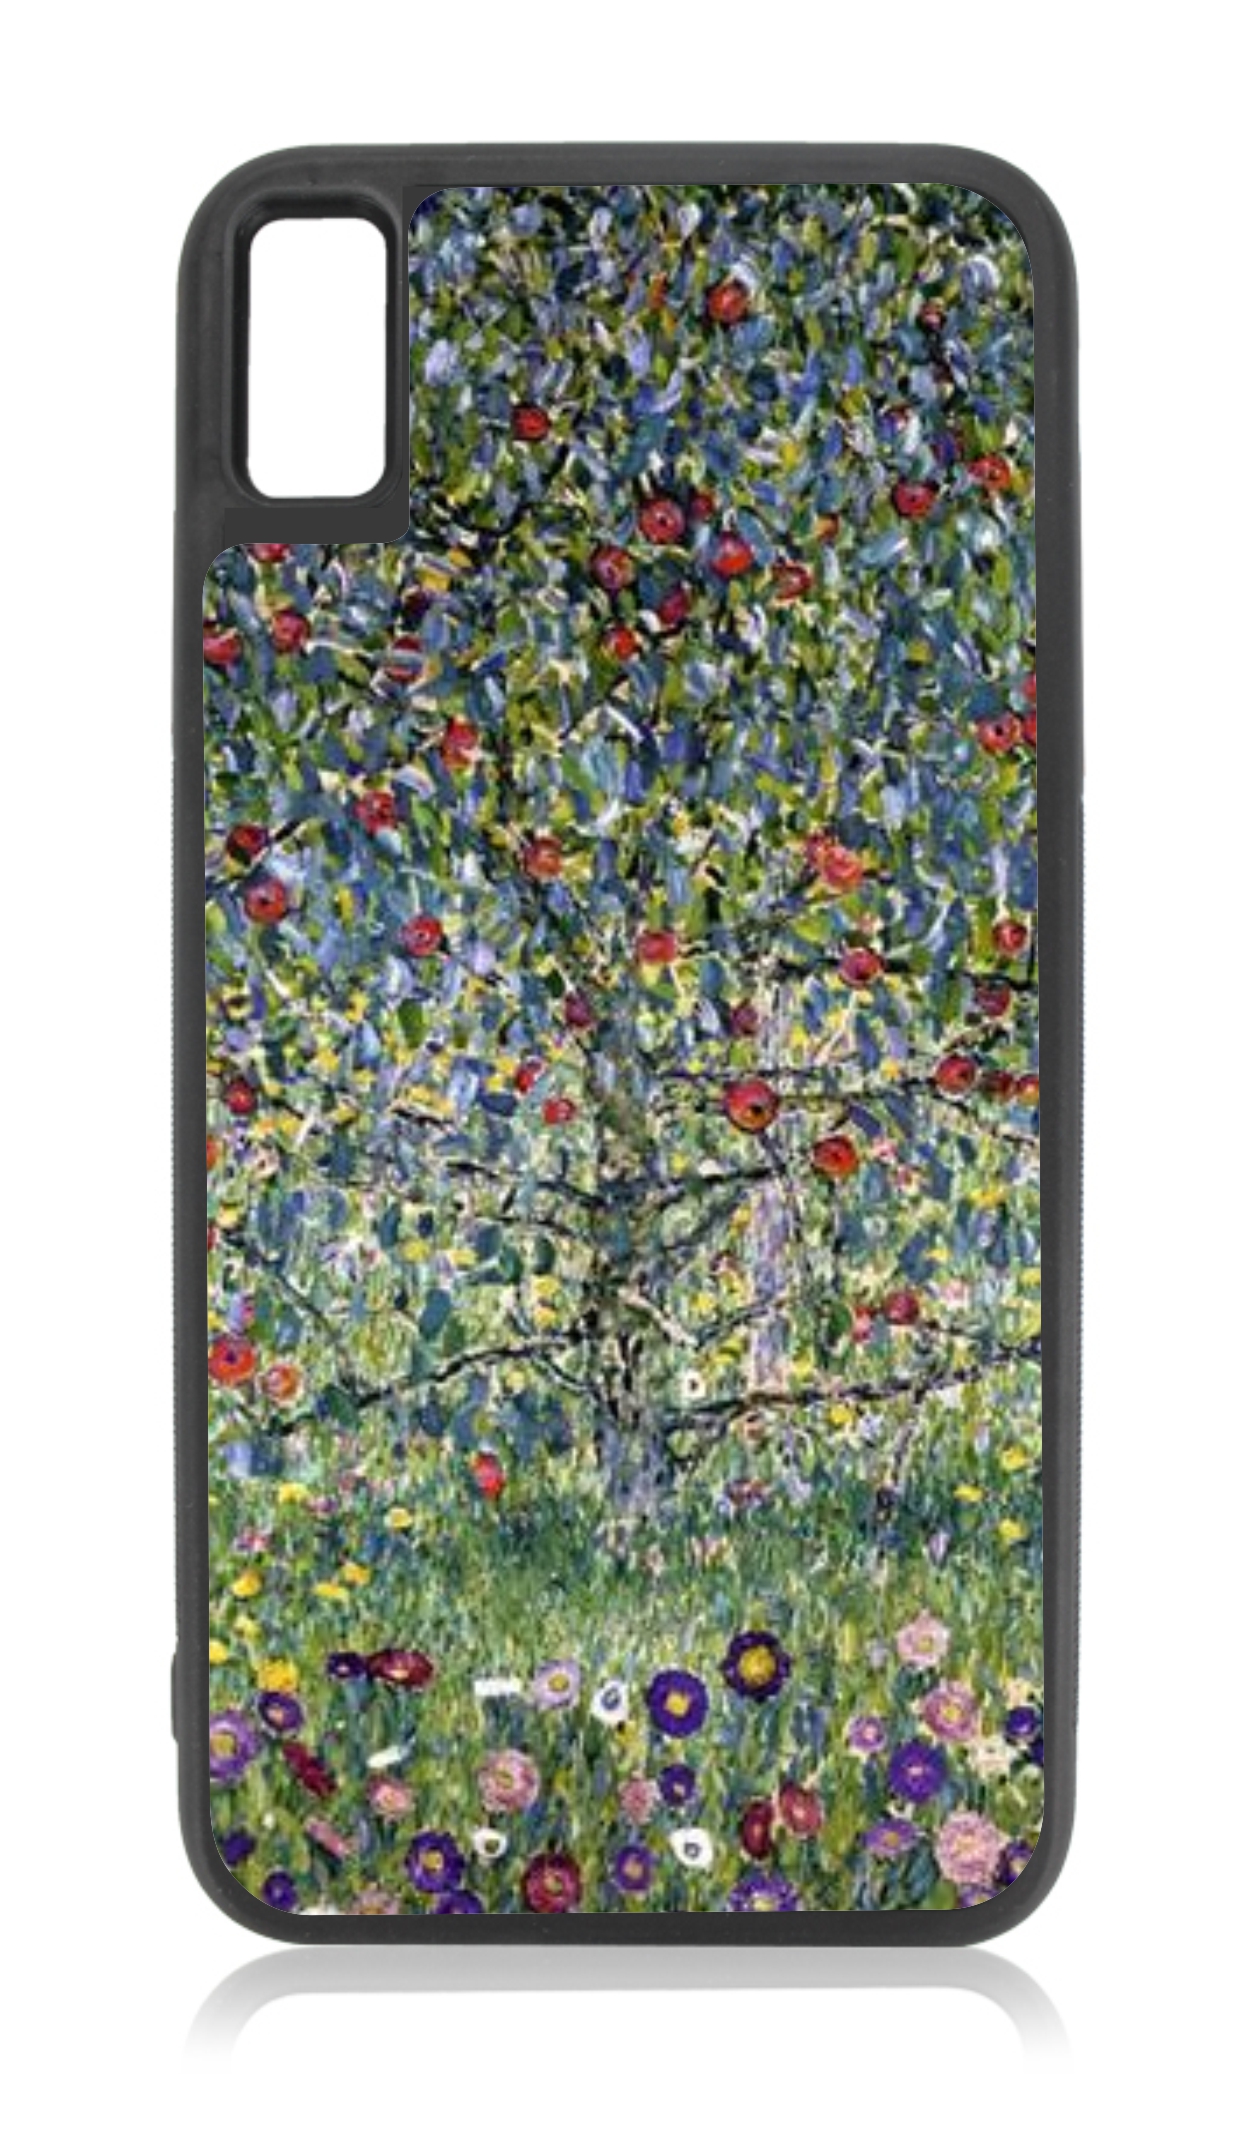 Artist Gustav Klimt's Apple Tree Painting iPhone 10 xr Tree Case Black Rubber Case for iPhone XR - iPhone XR Phone Case - iPhone XR Accessories - image 1 of 1